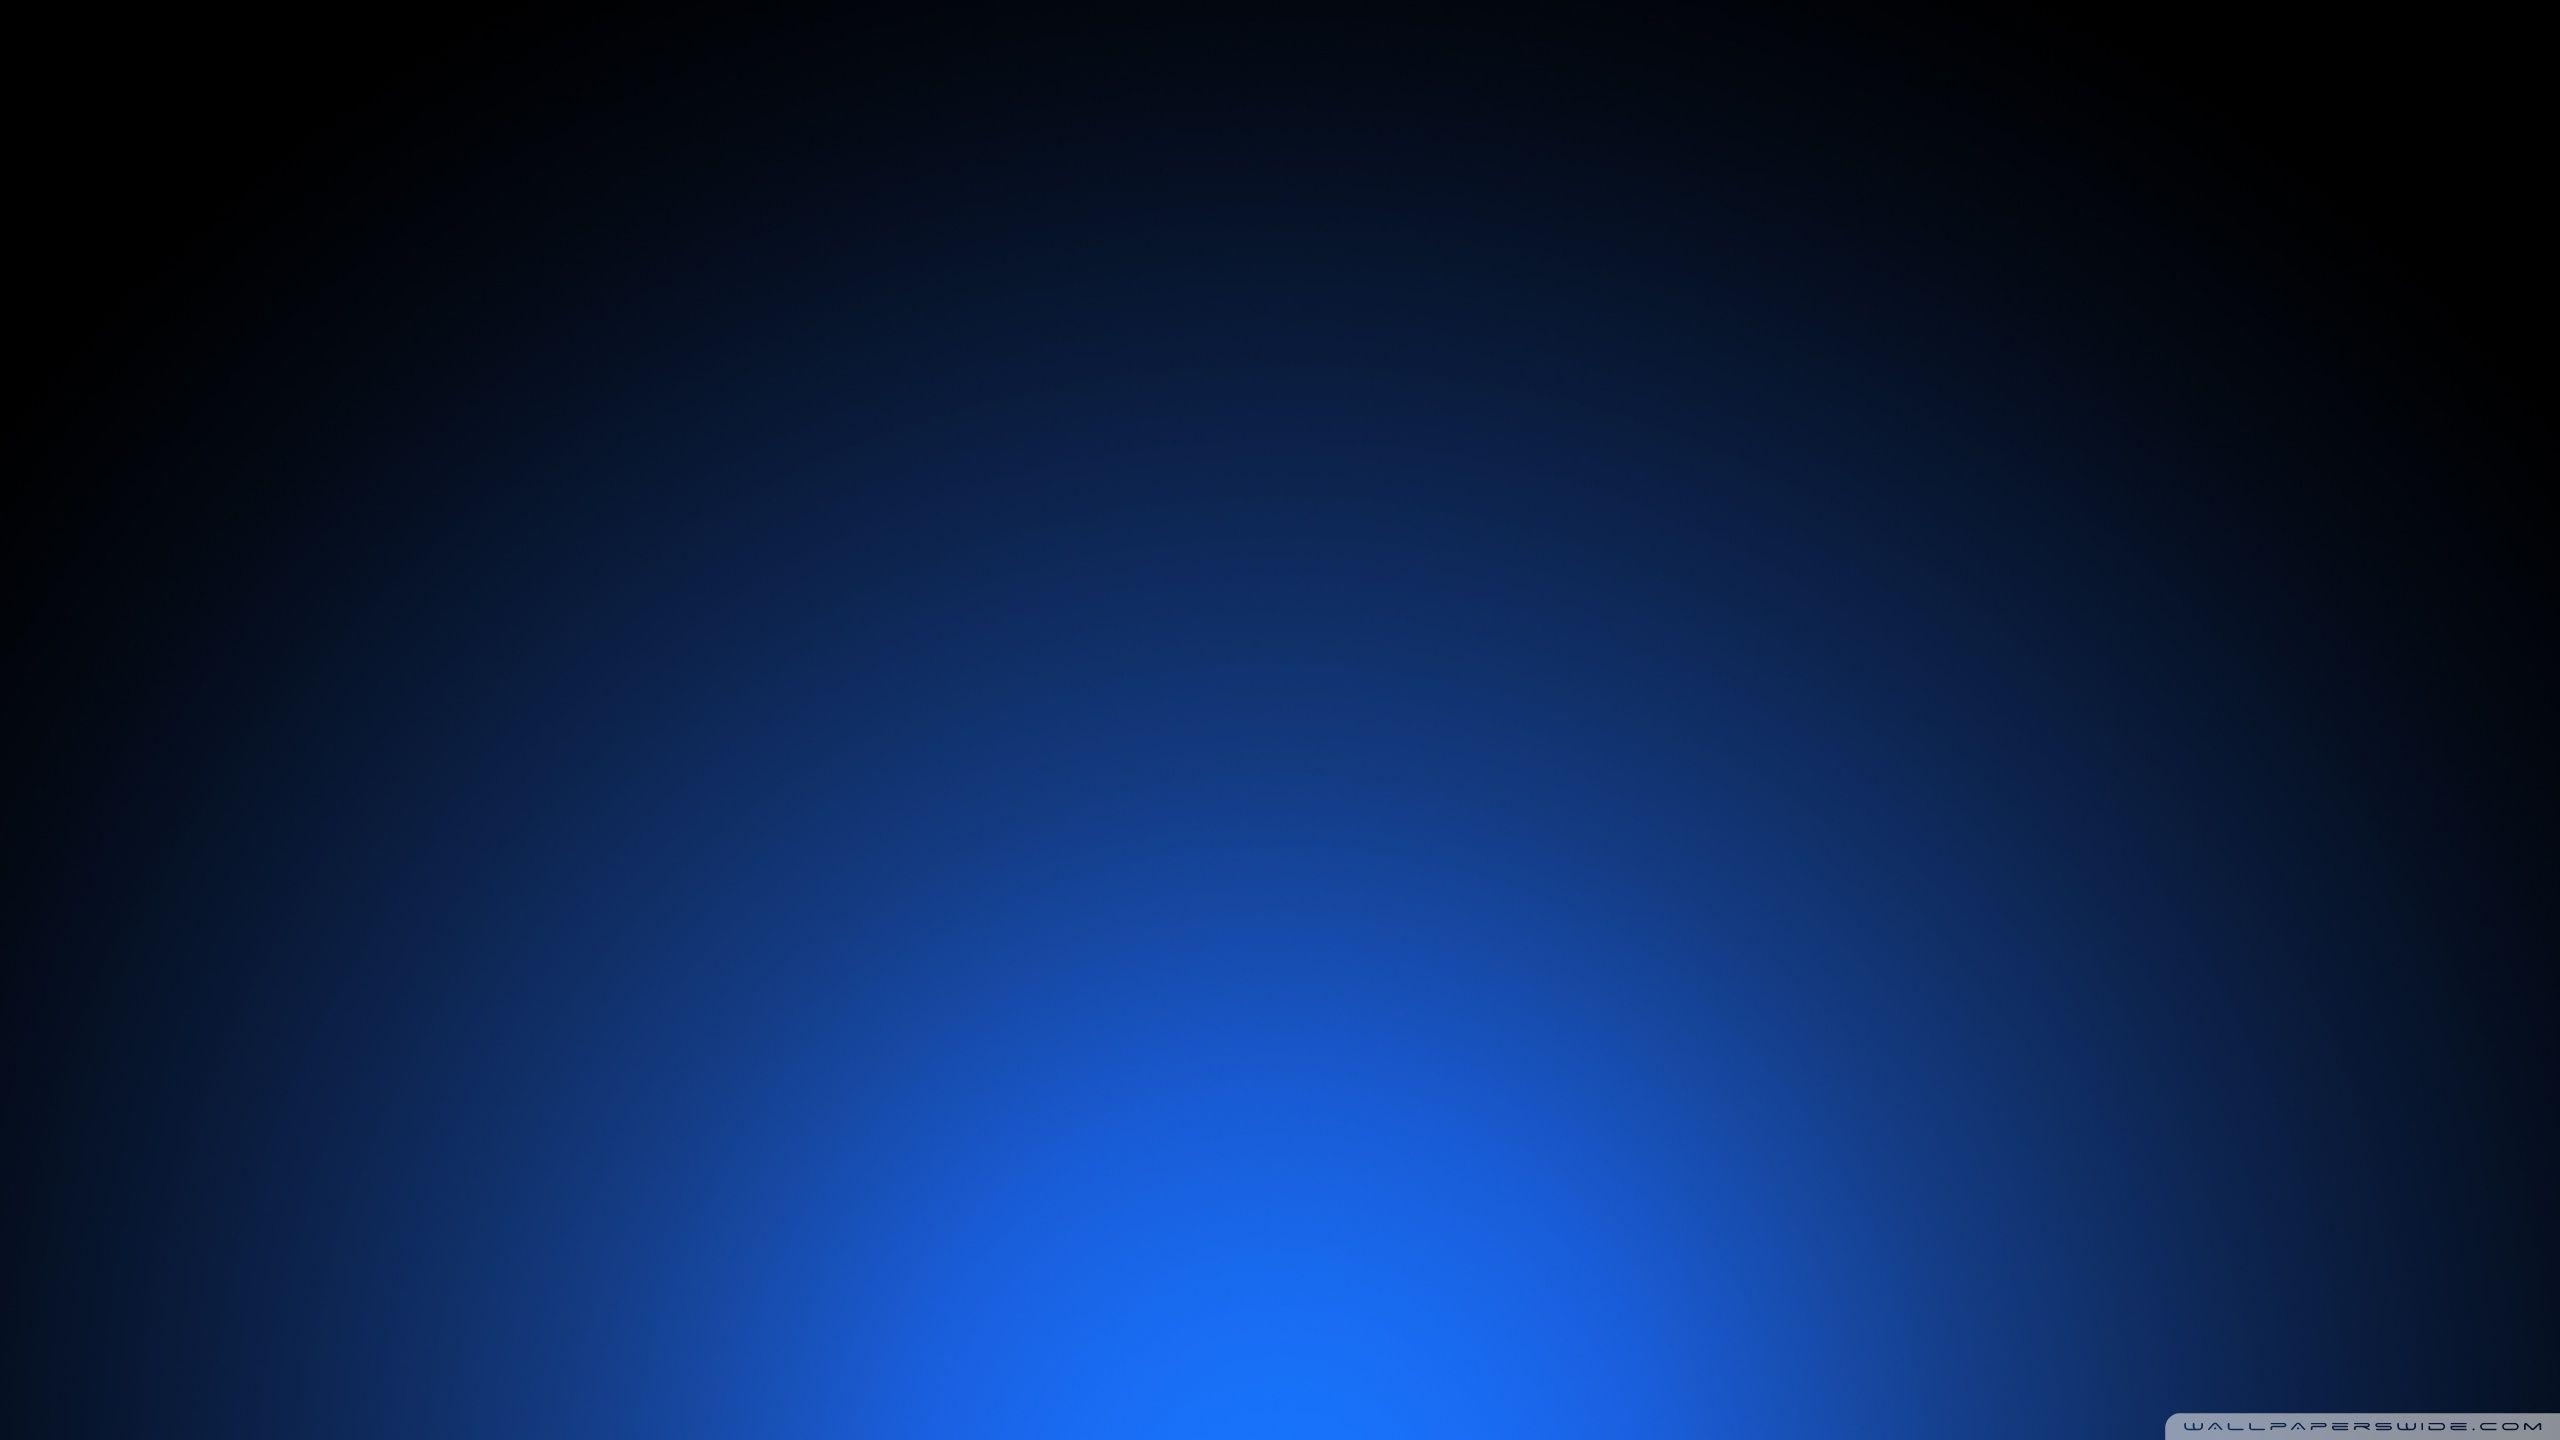 Dark Blue And Black Desktop Wallpapers - Top Free Dark Blue And Black